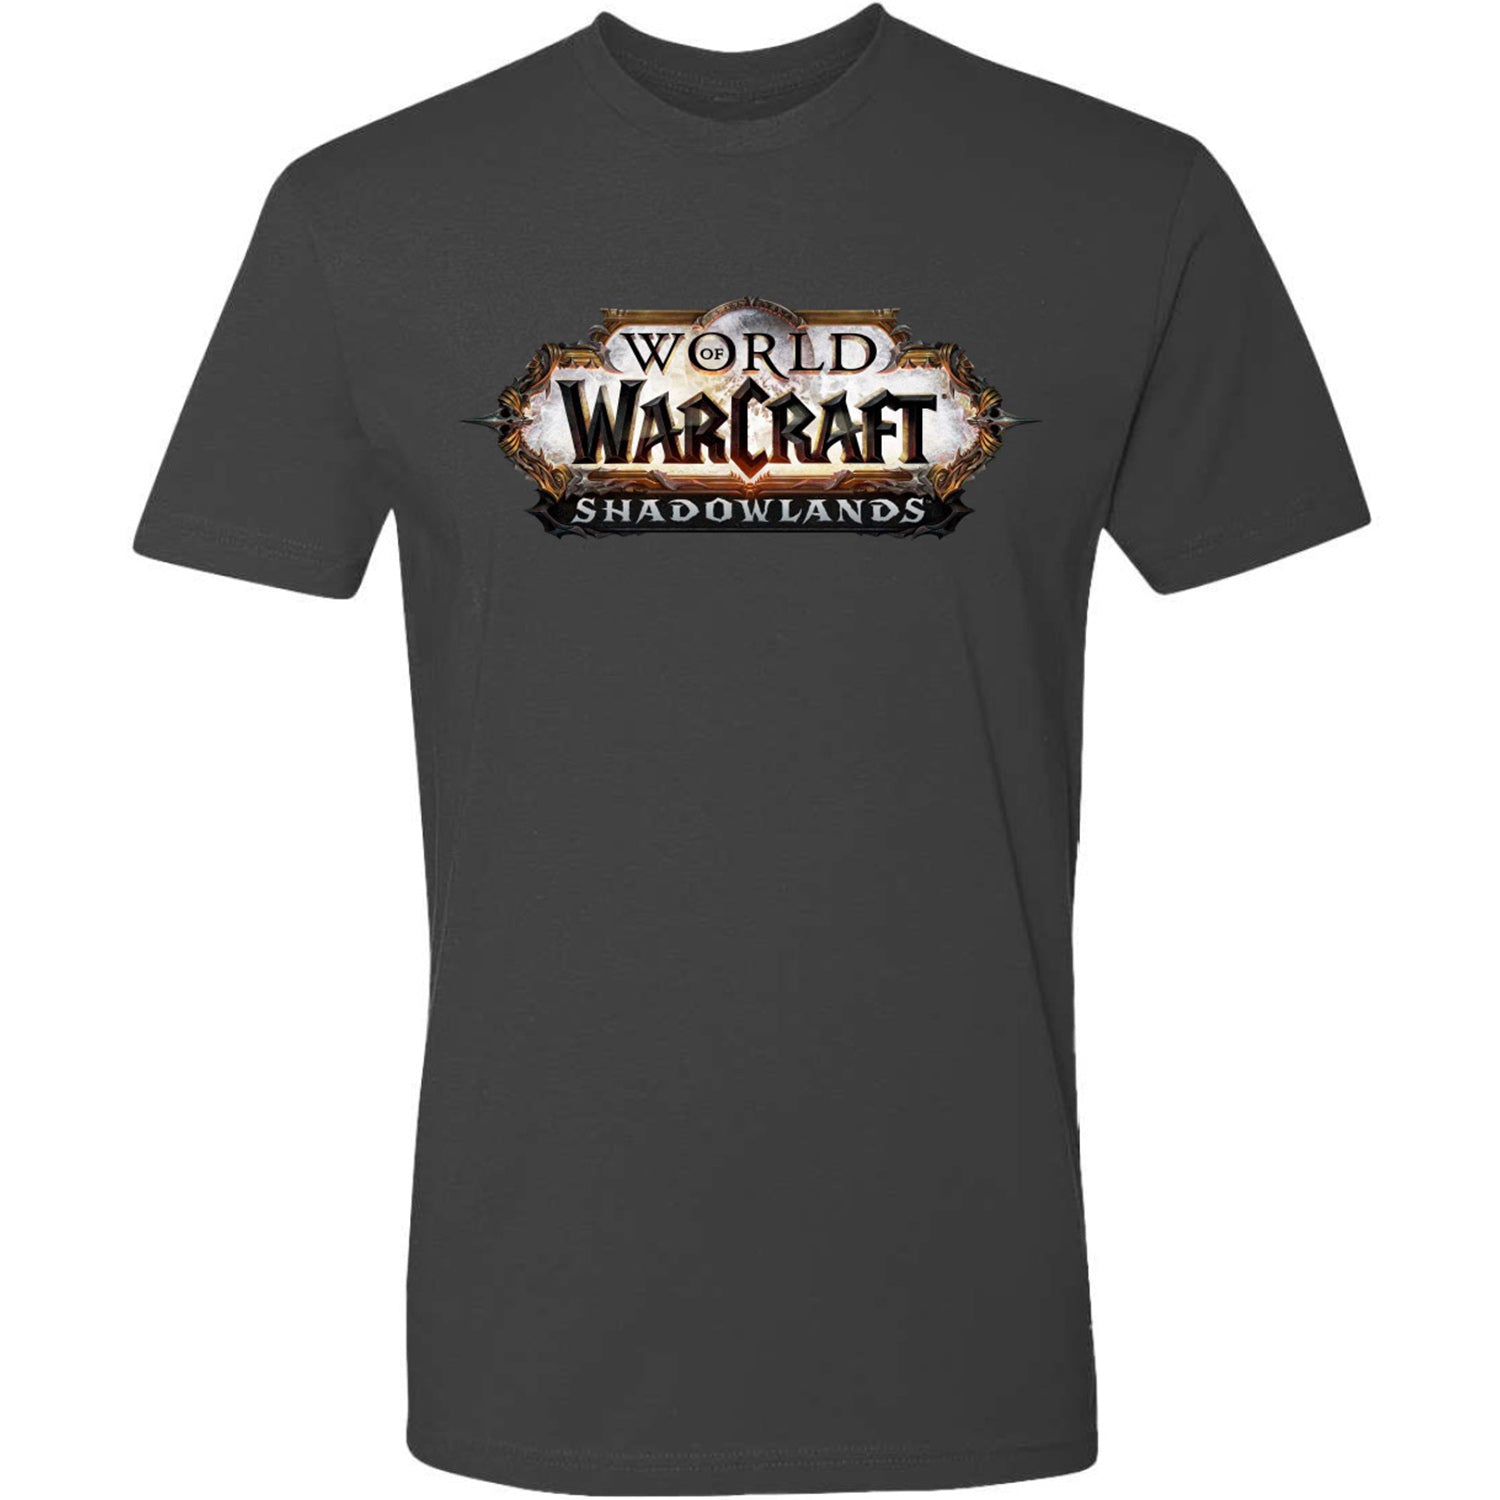 World of Warcraft Shadowlands Logo Grey T-Shirt - Front View